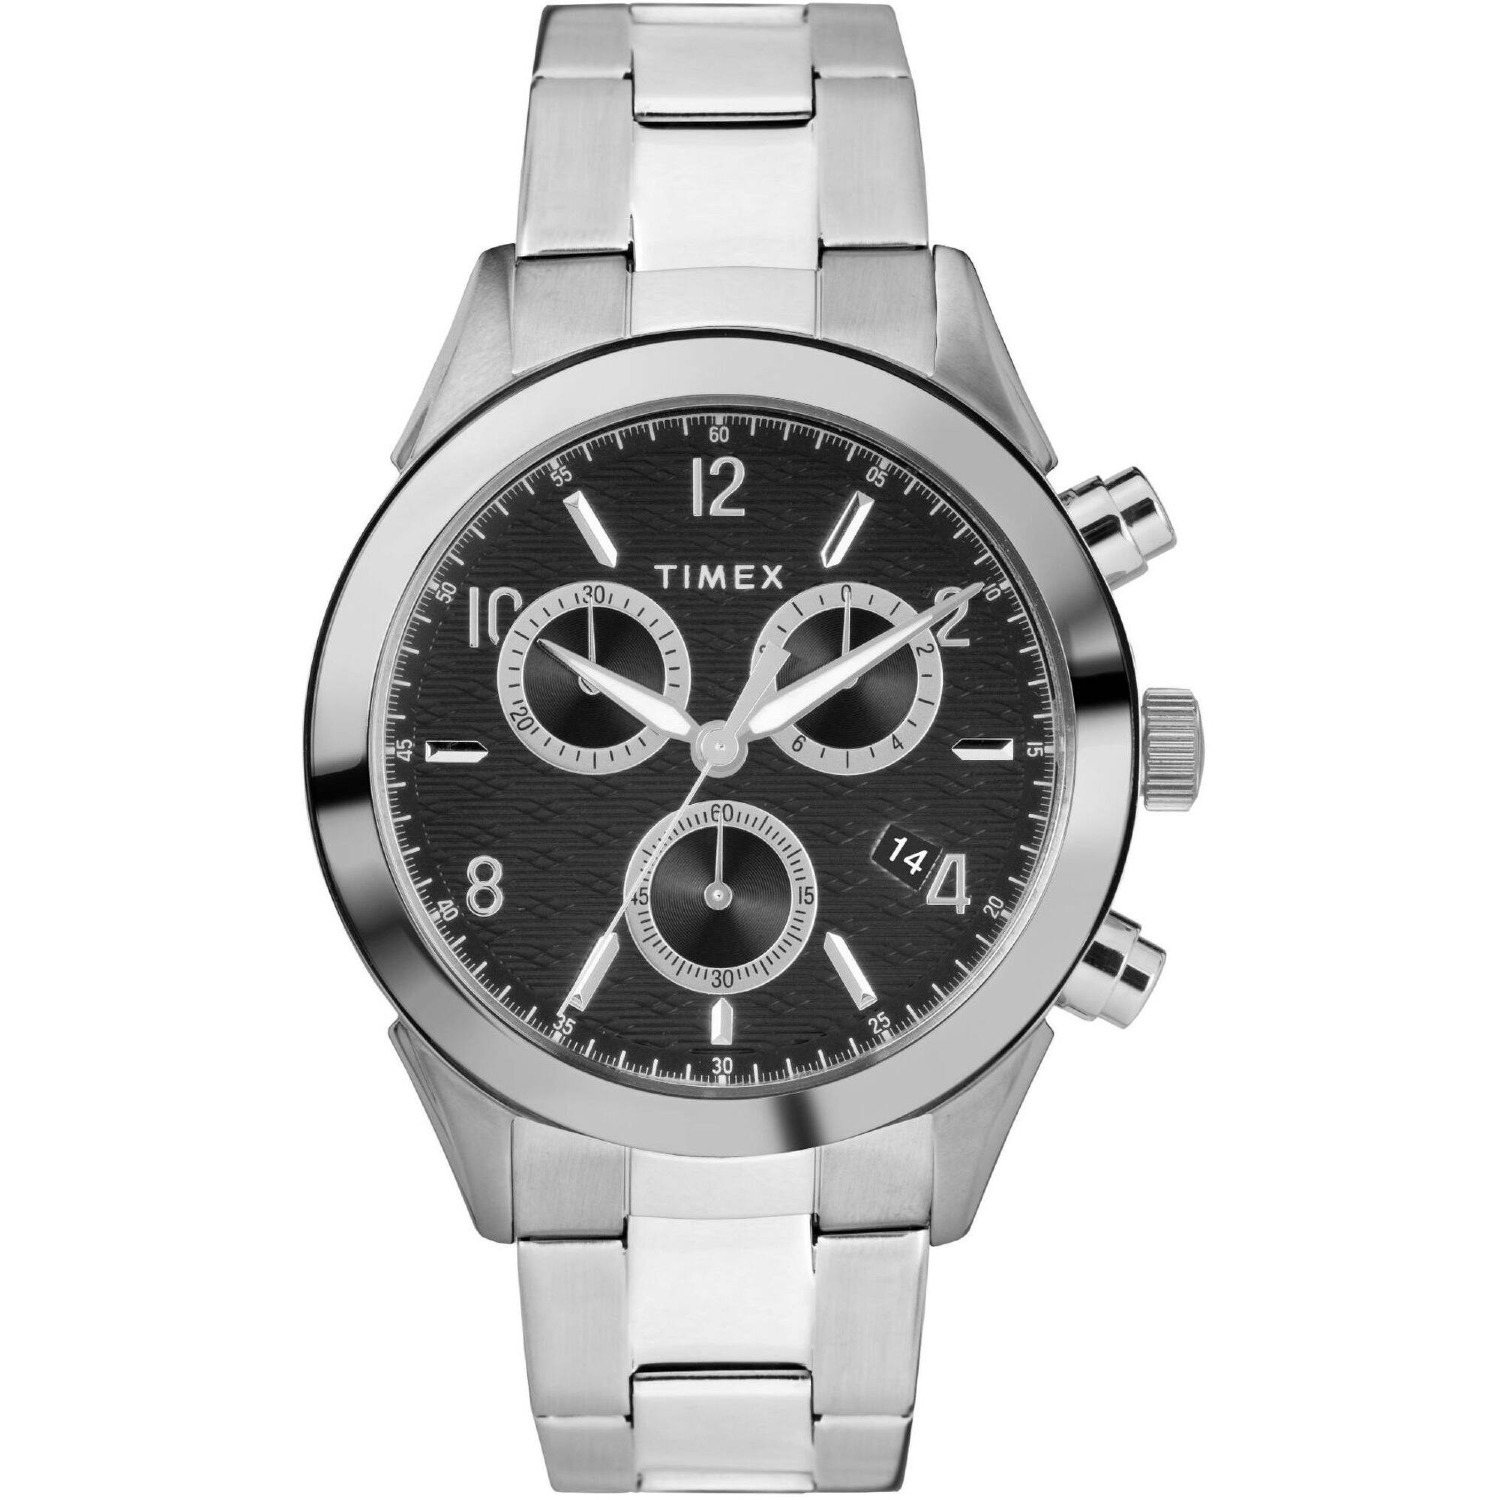 Timex Men's Torrington Silver Tone Bracelet Watch $65.37 + Free Shipping